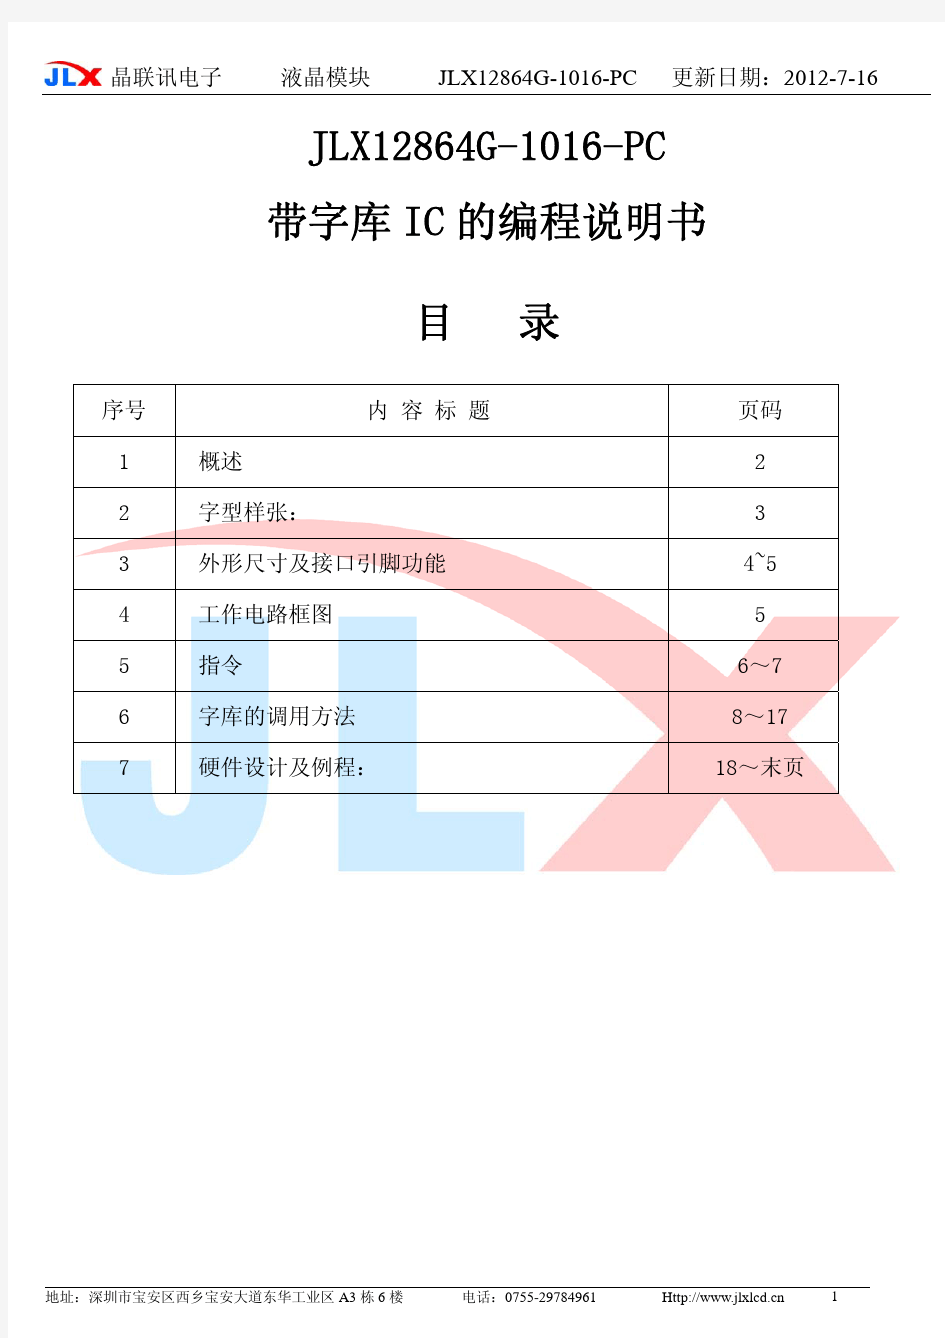 JLX12864G-1016-PC的中文字库编程说明书